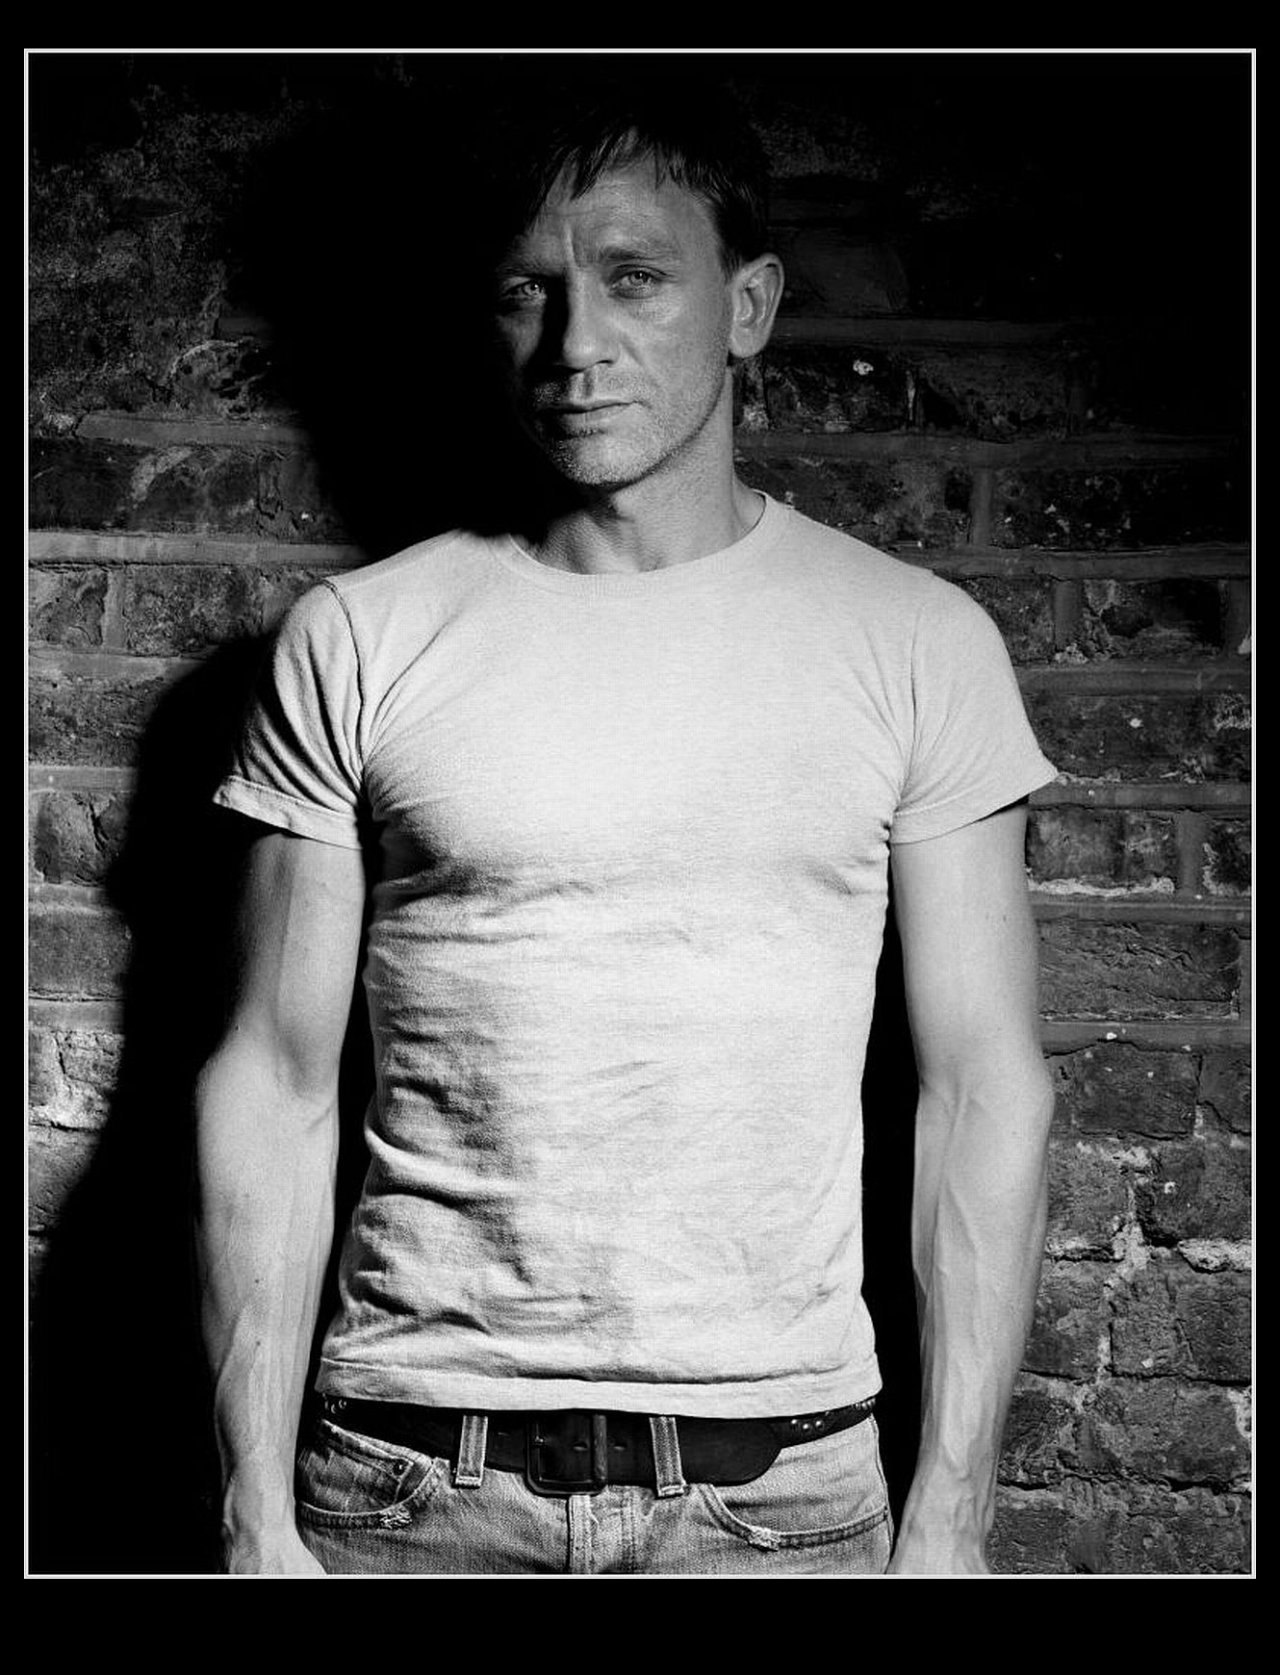 Daniel Craig photo 11 of 798 pics, wallpaper - photo #73250 - ThePlace2